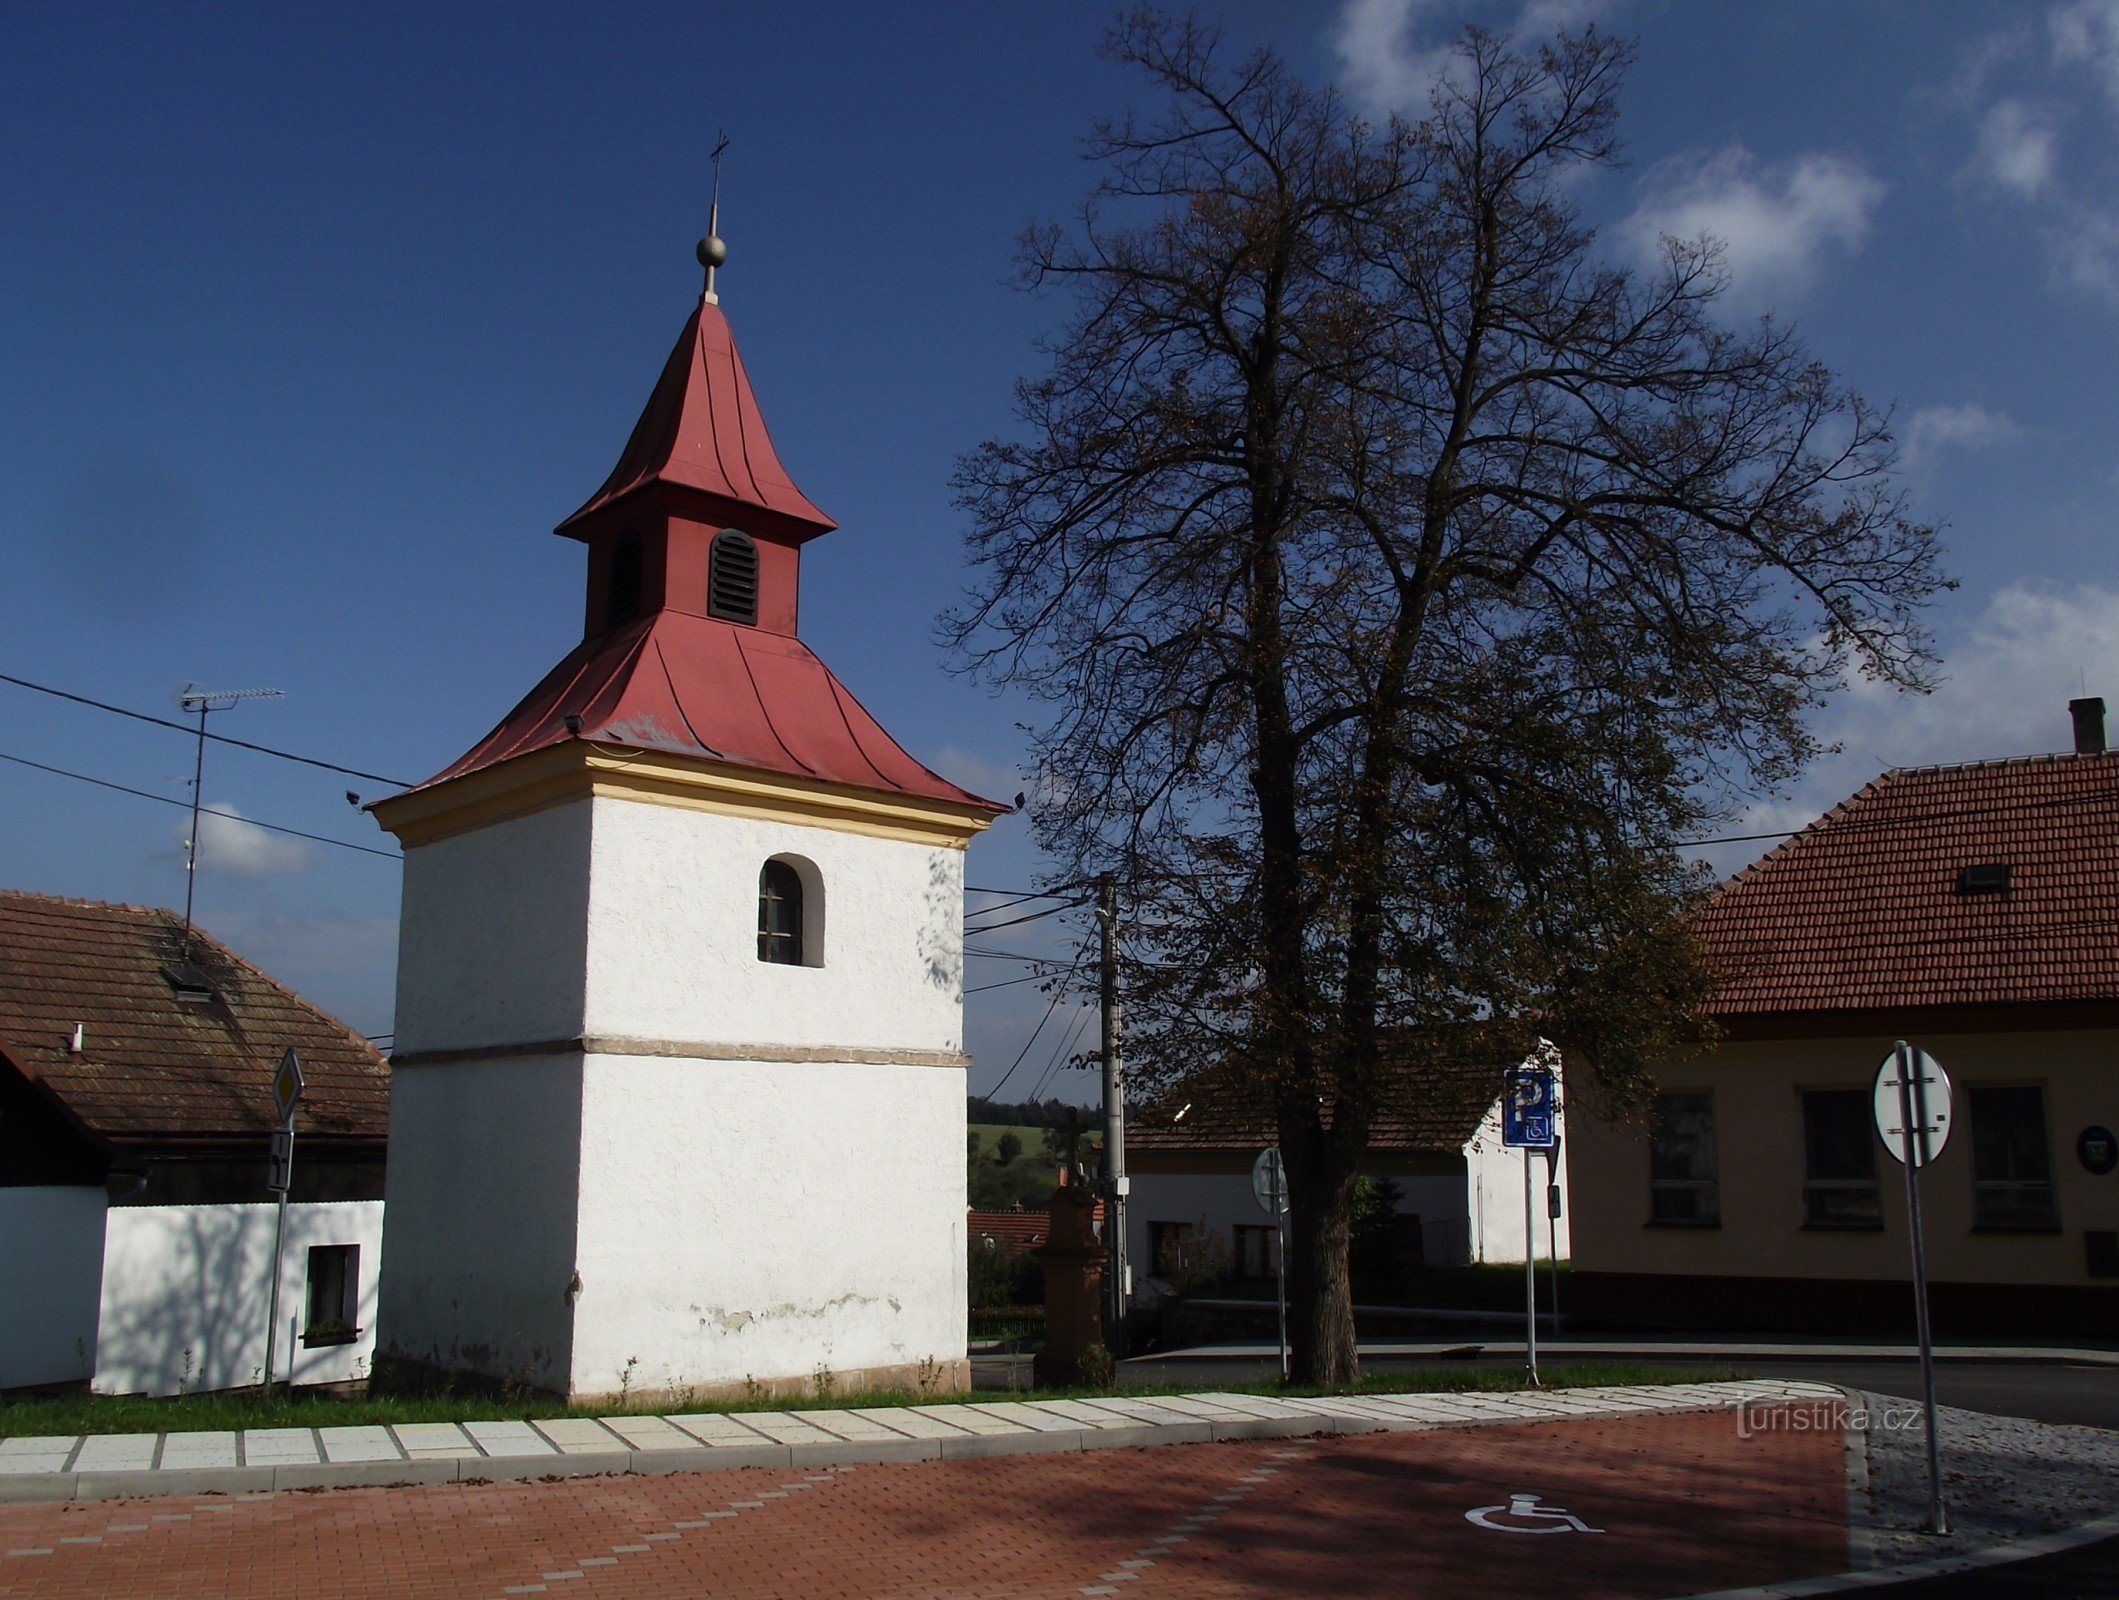 Hluboké Dvory (nær Tišnov) - Kapel for Jomfru Marias himmelfart